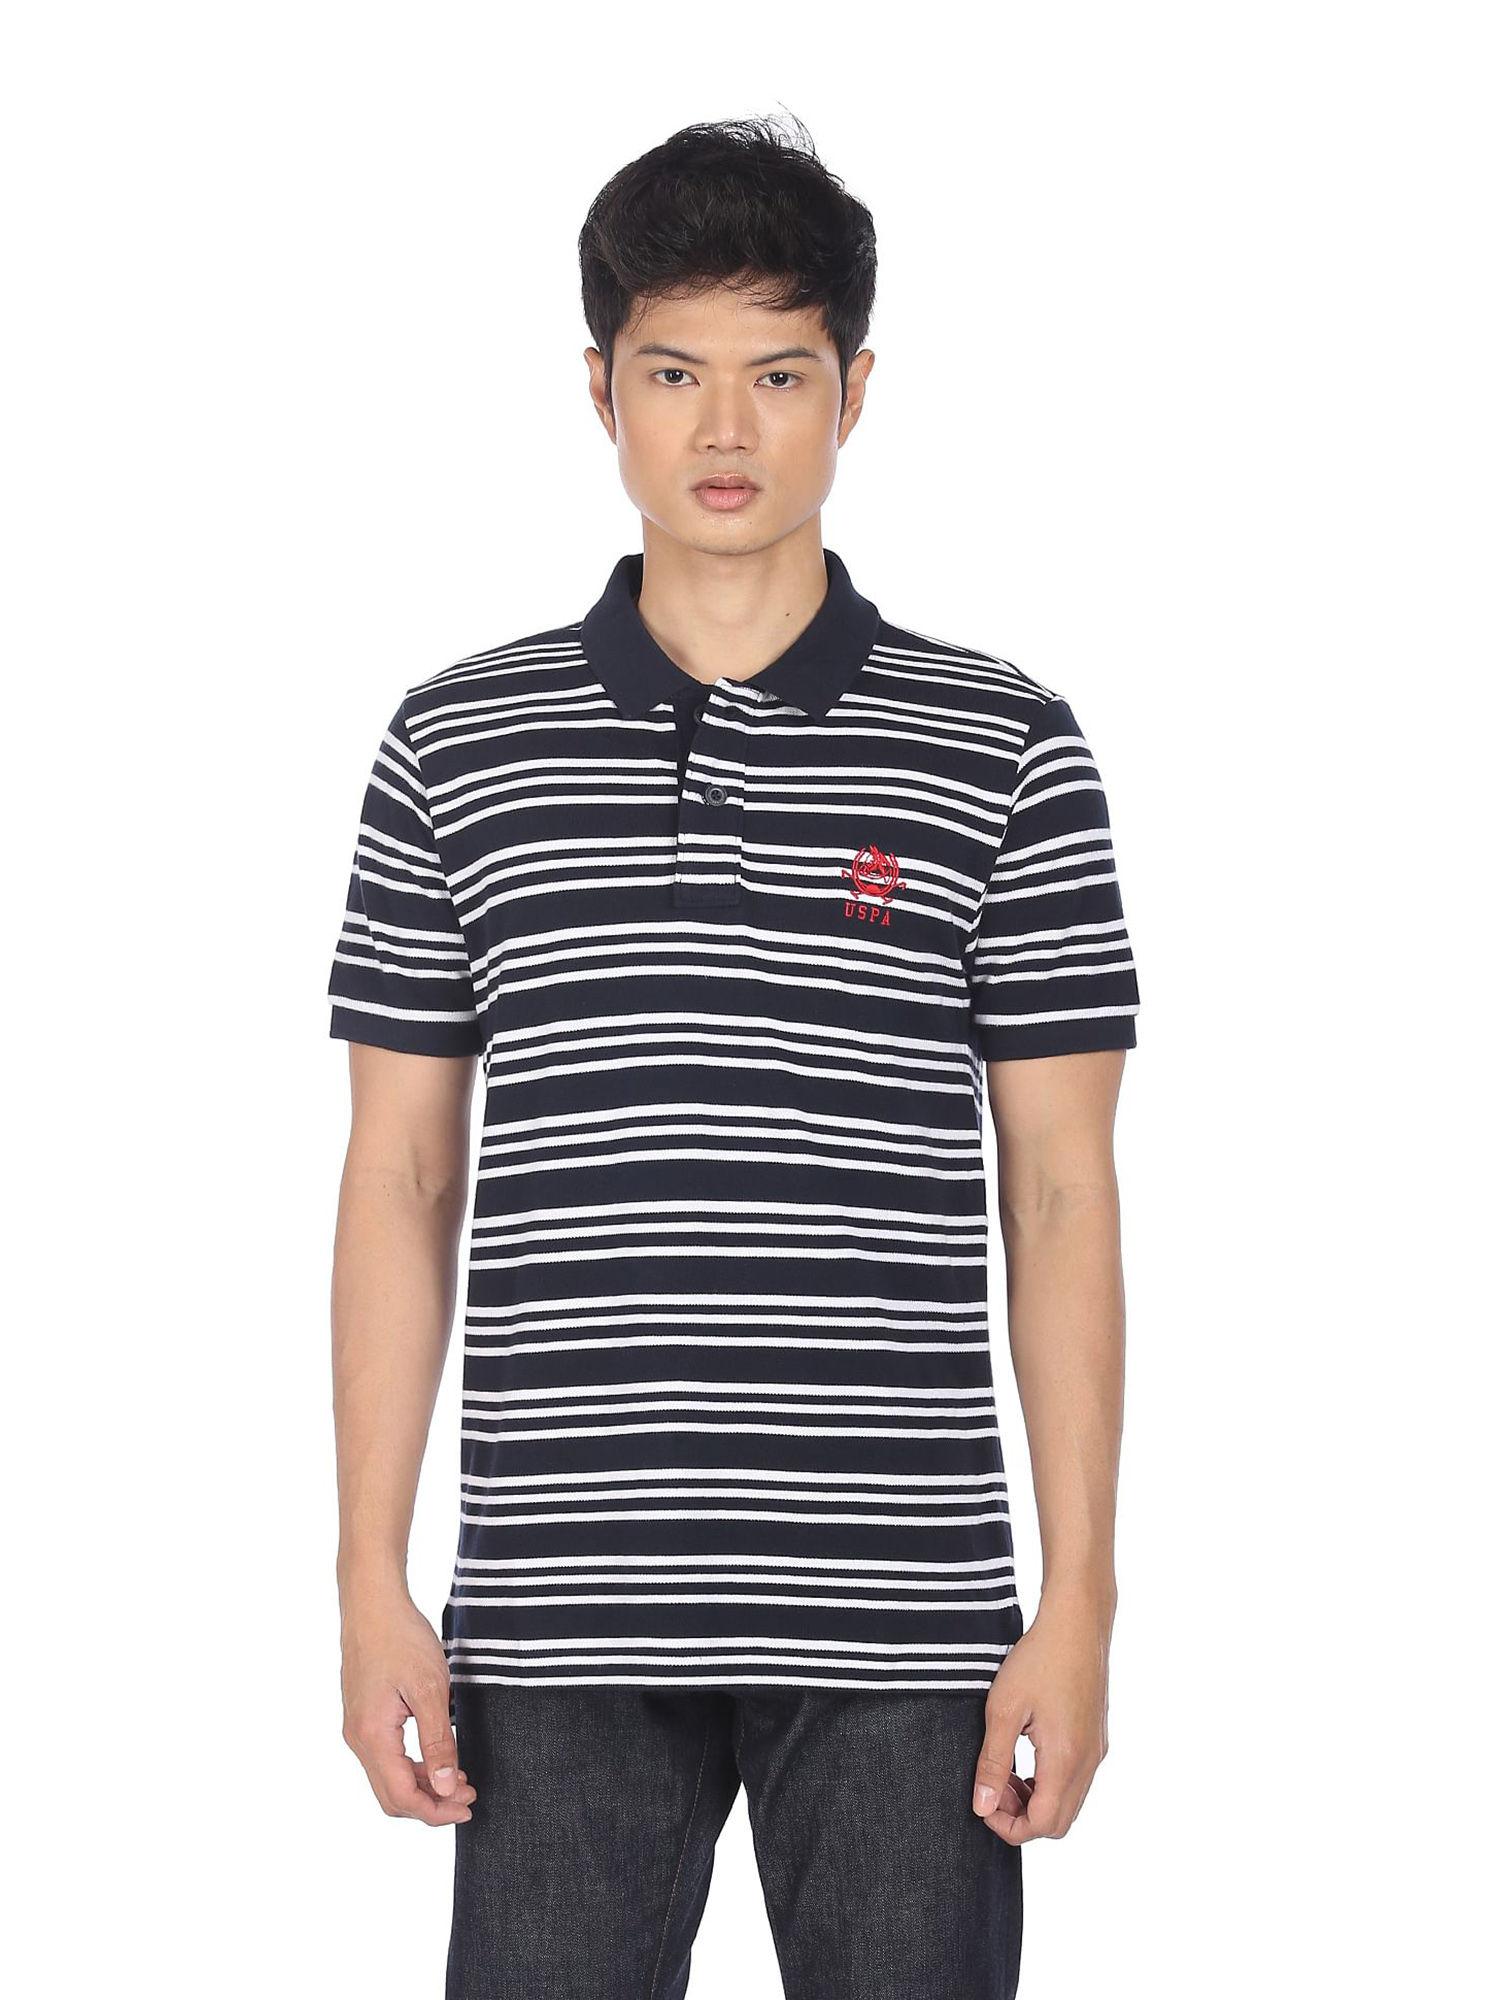 men white and black striped short sleeve polo t-shirt